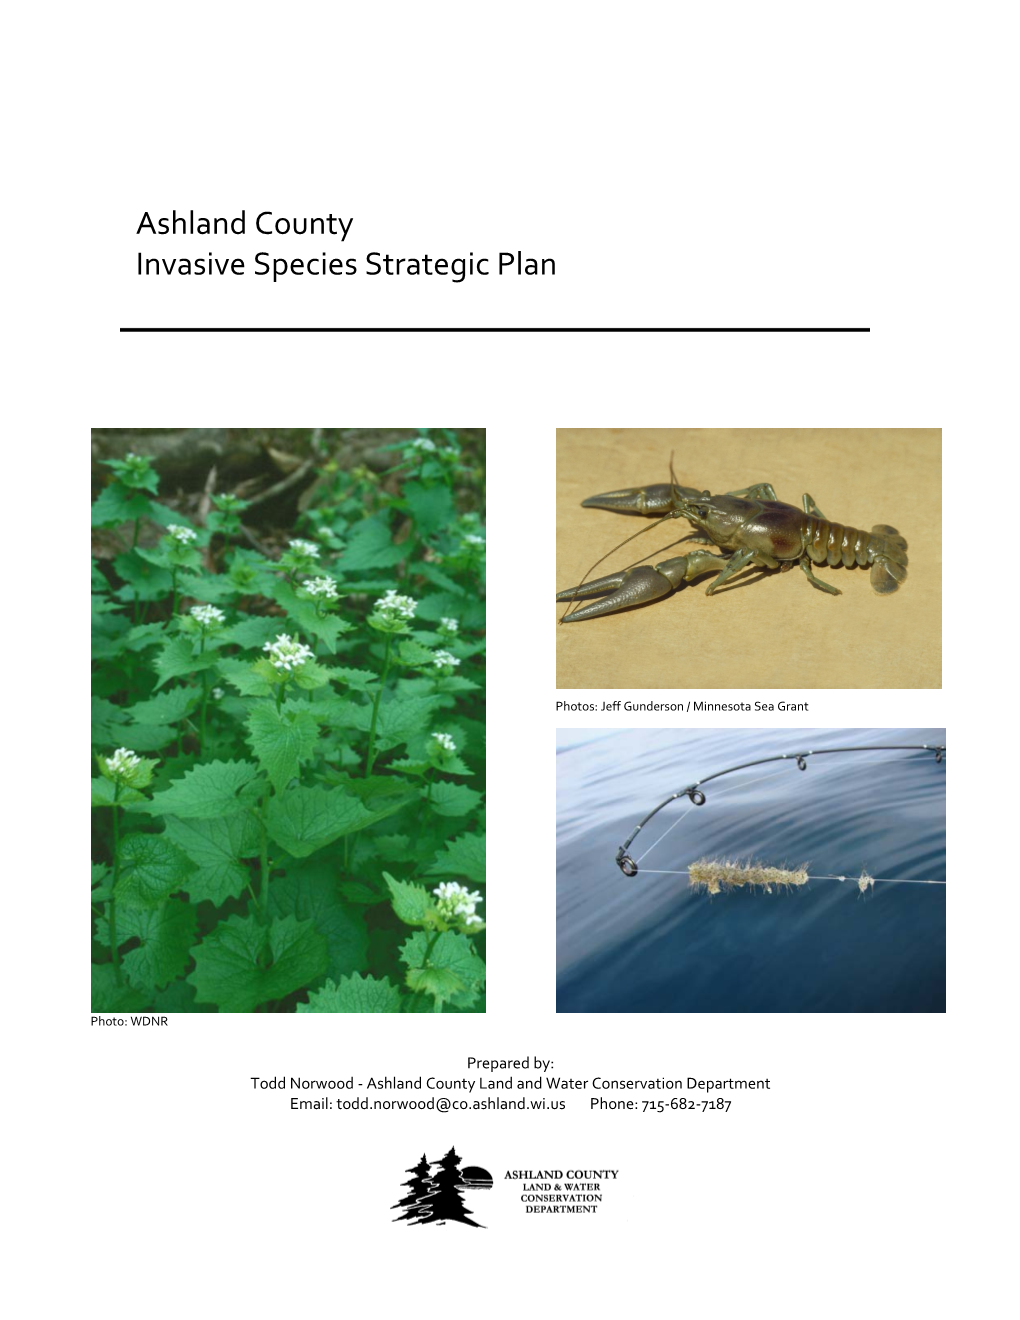 Ashland County Strategic Plan